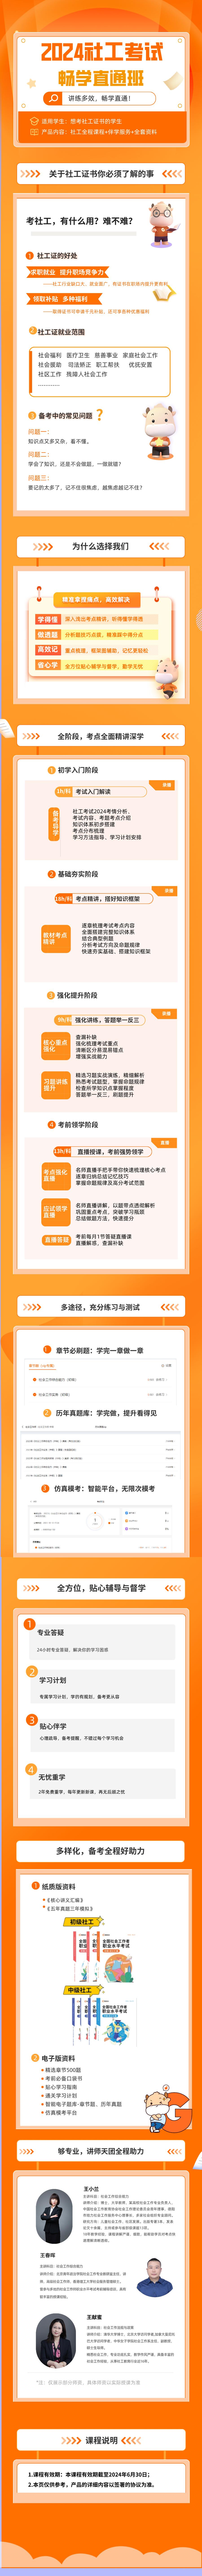 https://simg01.gaodunwangxiao.com/uploadfiles/product-center/202404/19/4caa6_20240419112403.jpg